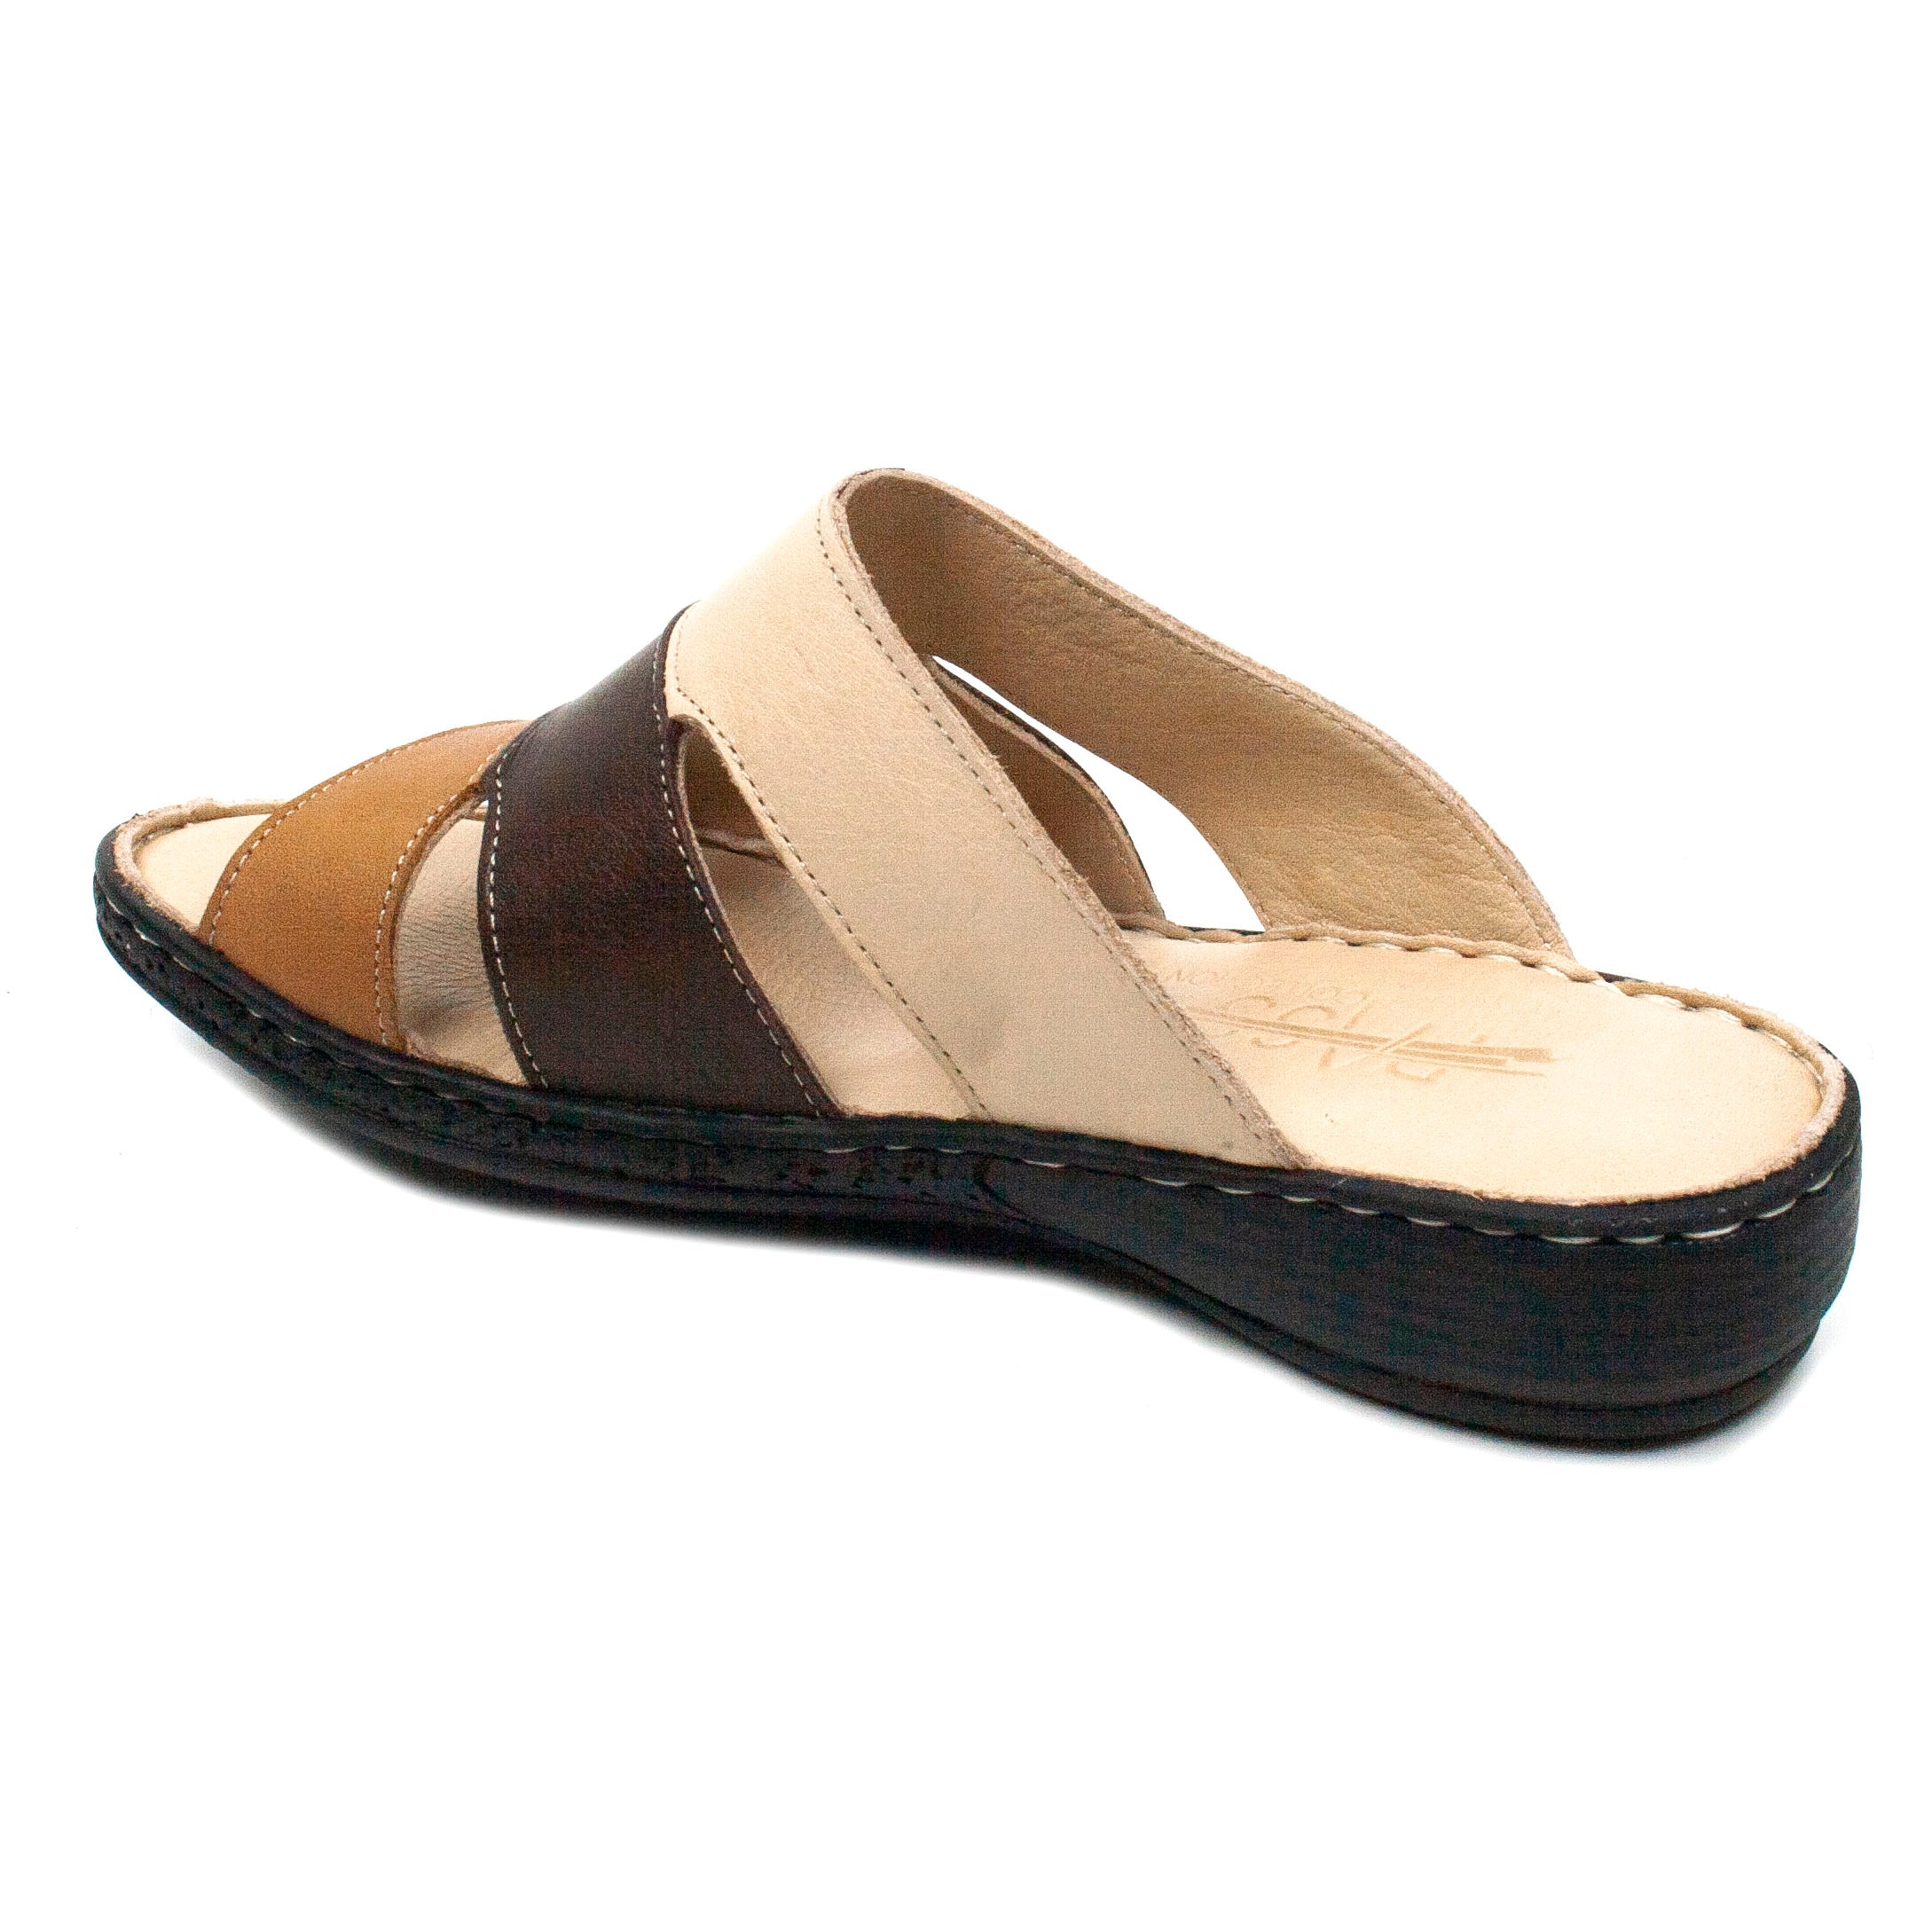 Pass Collection papuci dama maro ID2104-MARO